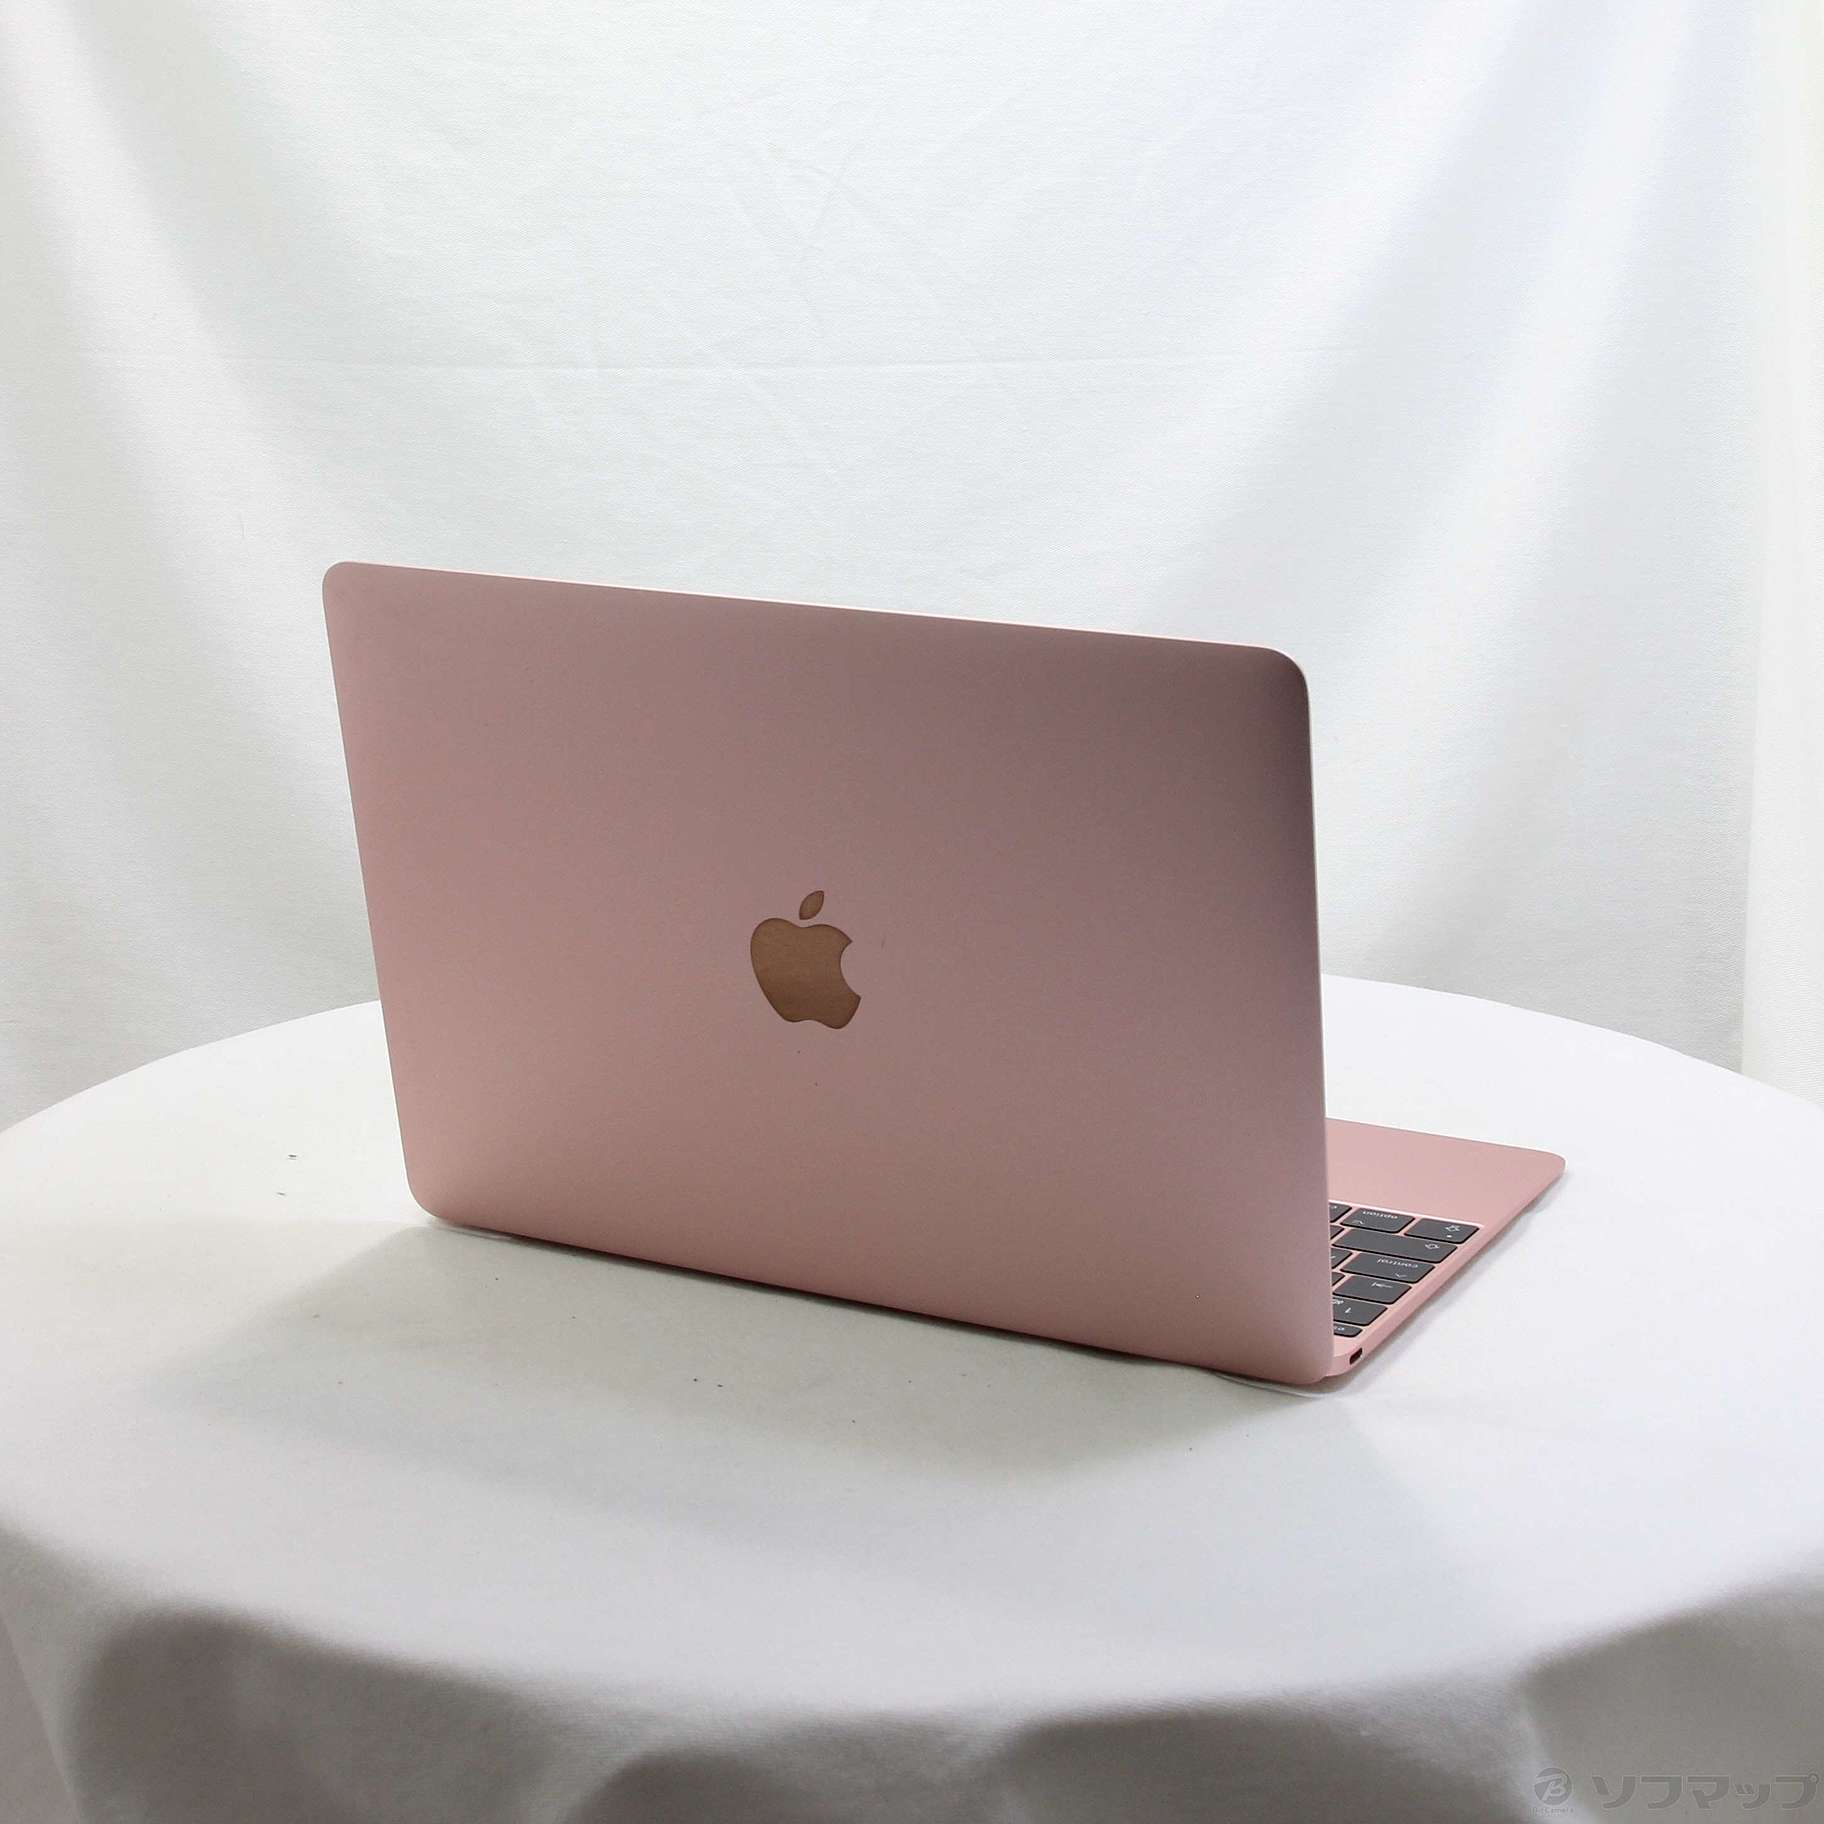 APPLE MacBook 12-inch ゴールド